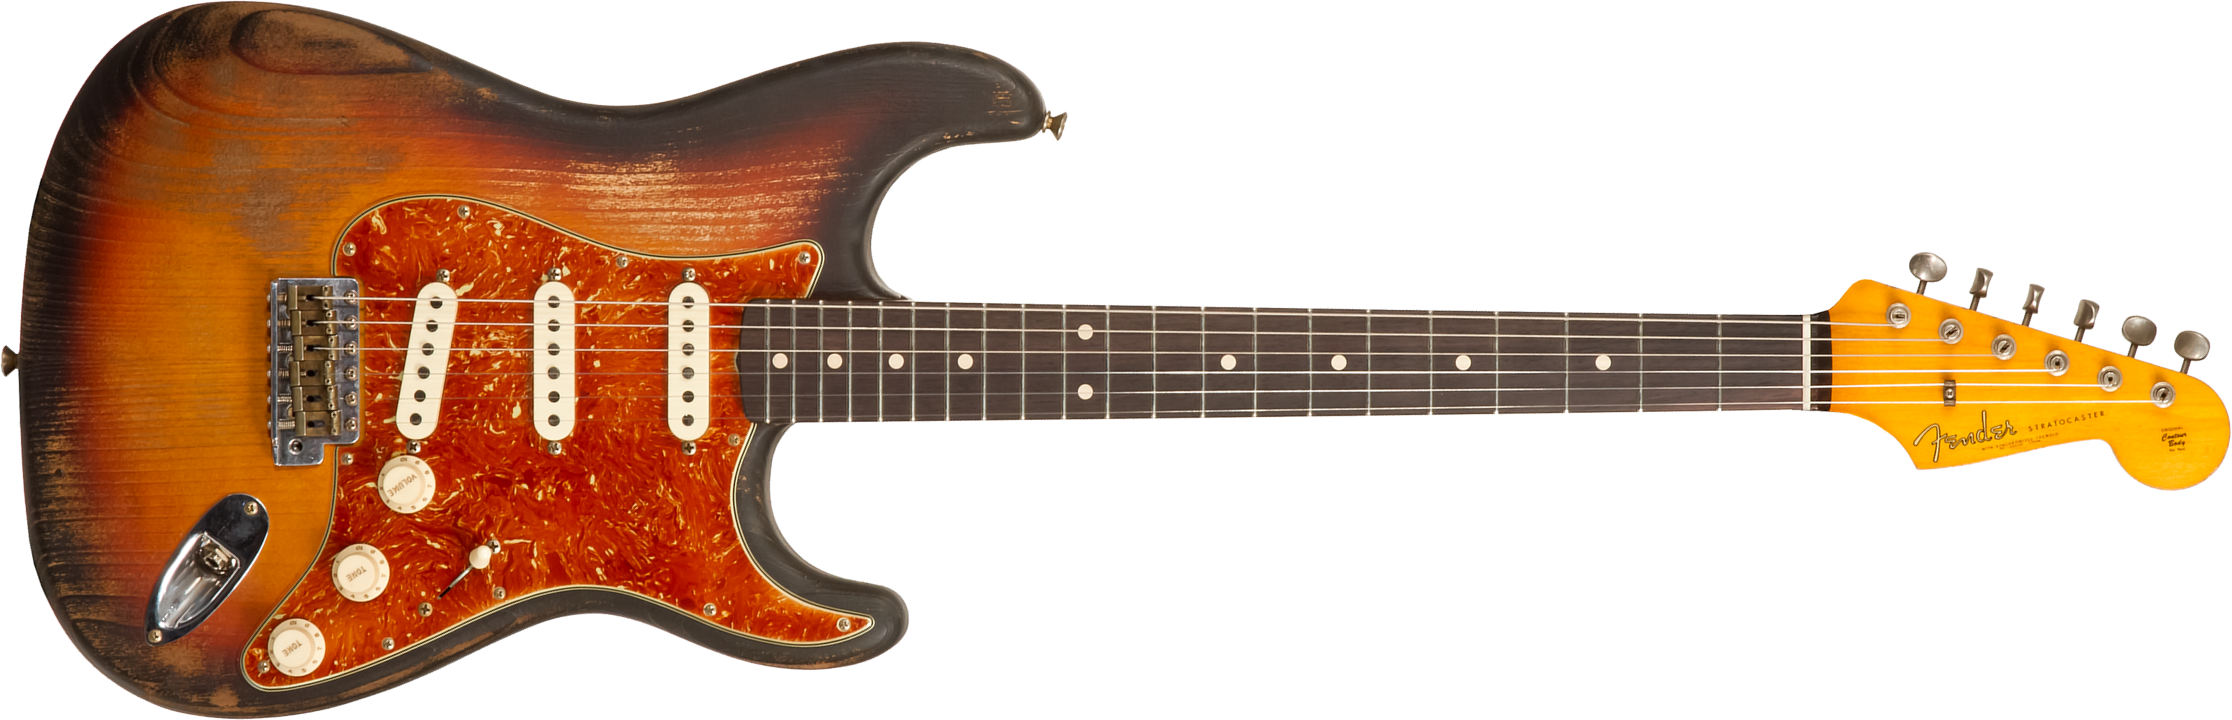 Fender Custom Shop Strat Sandblasted Masterbuilt P.walker #r117542 - Heavy Relic 3-color Sunburst - Str shape electric guitar - Main picture